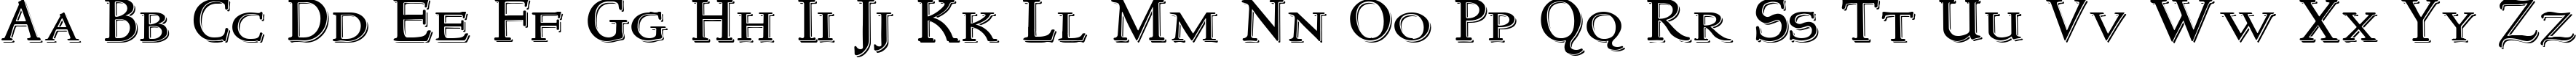 Пример написания английского алфавита шрифтом NewStyleSmallCaps Embossed